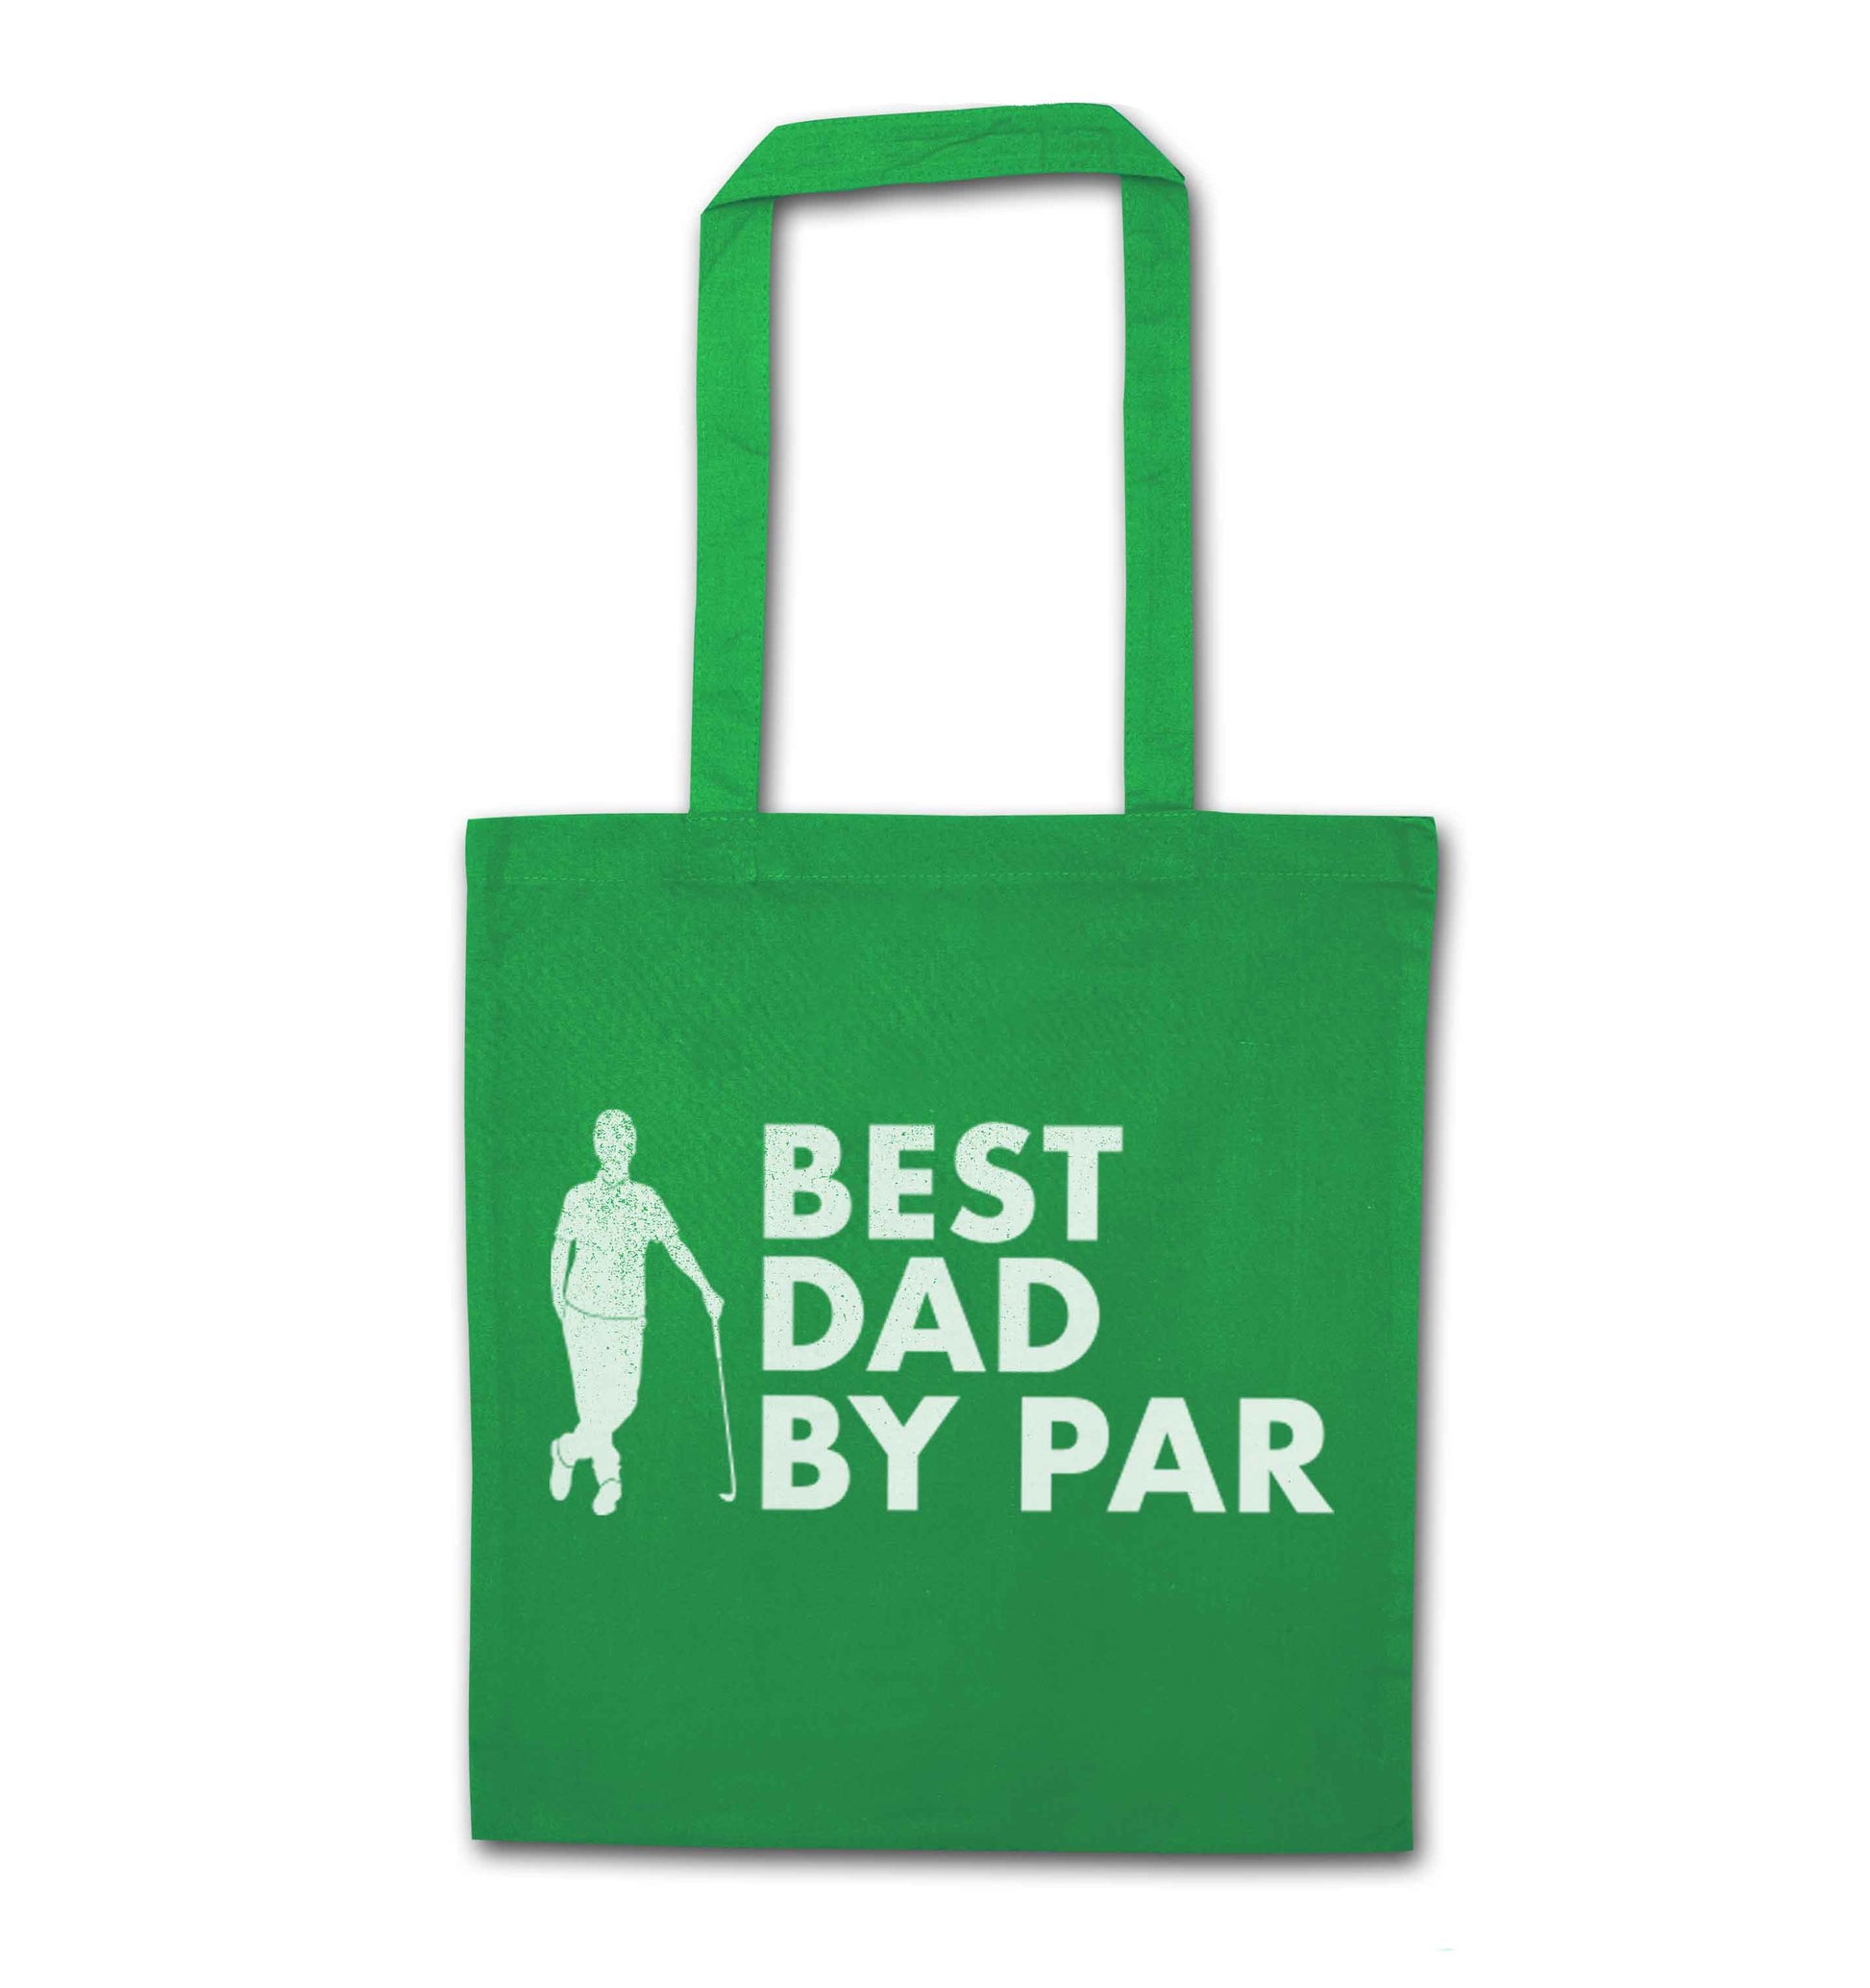 Best dad by par green tote bag